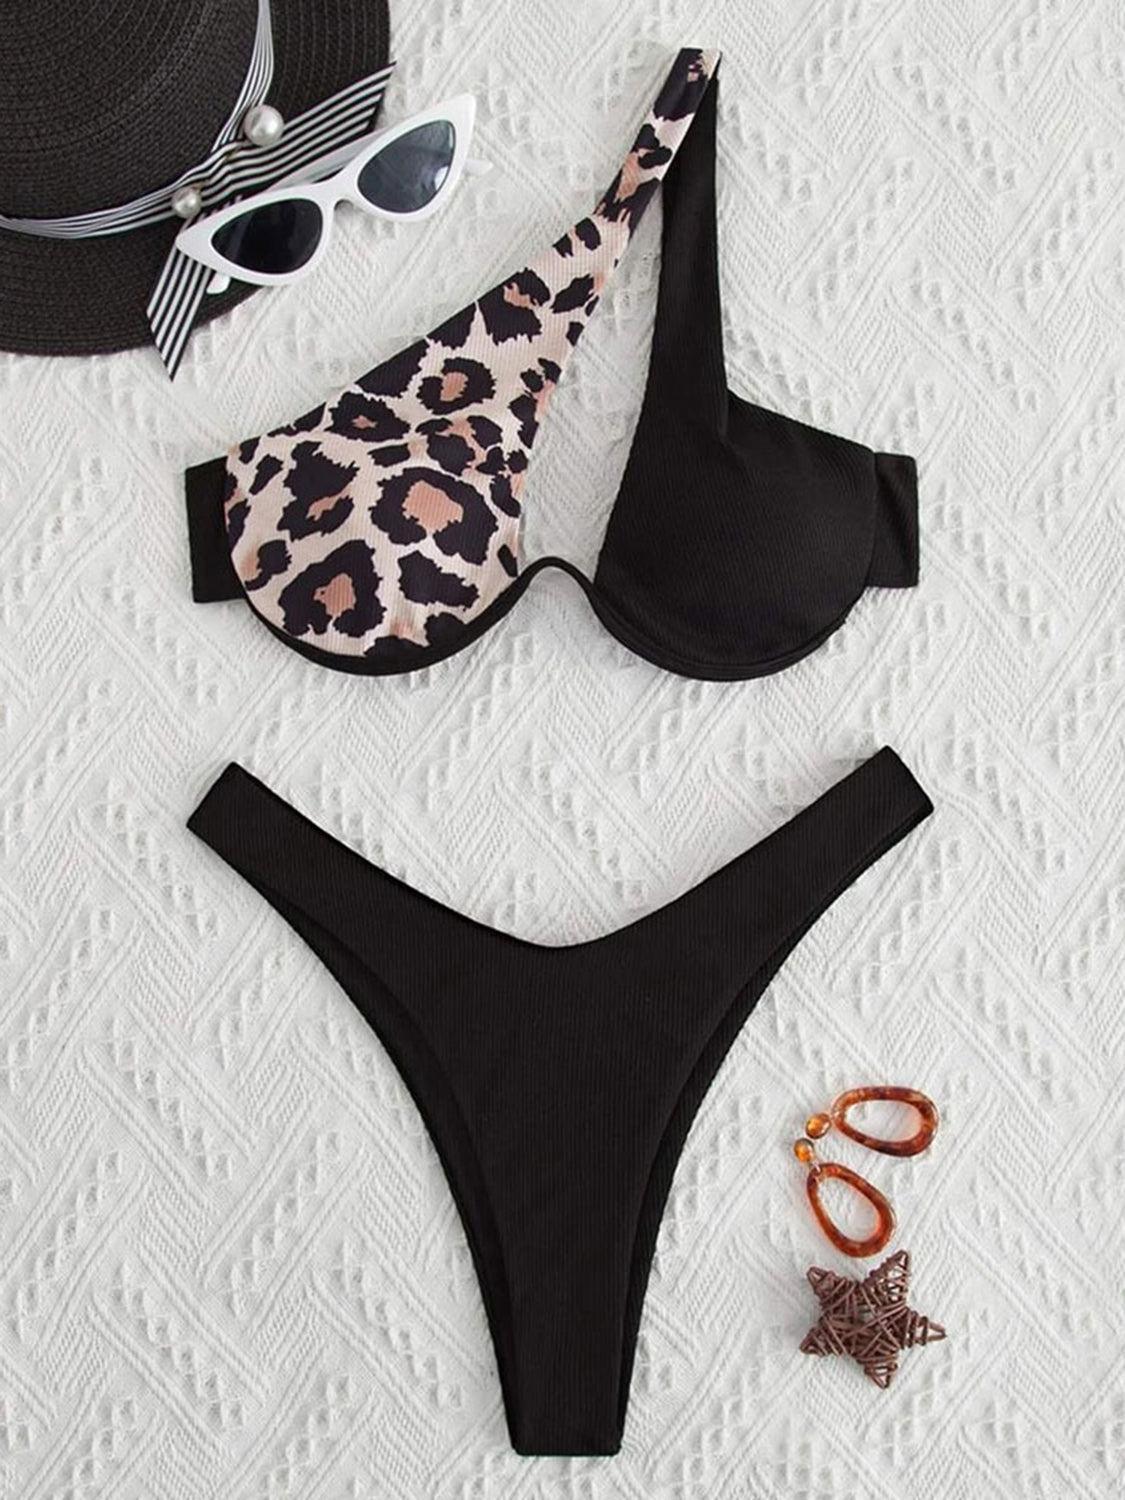 a bikini top, hat, sunglasses, and starfish on a bed